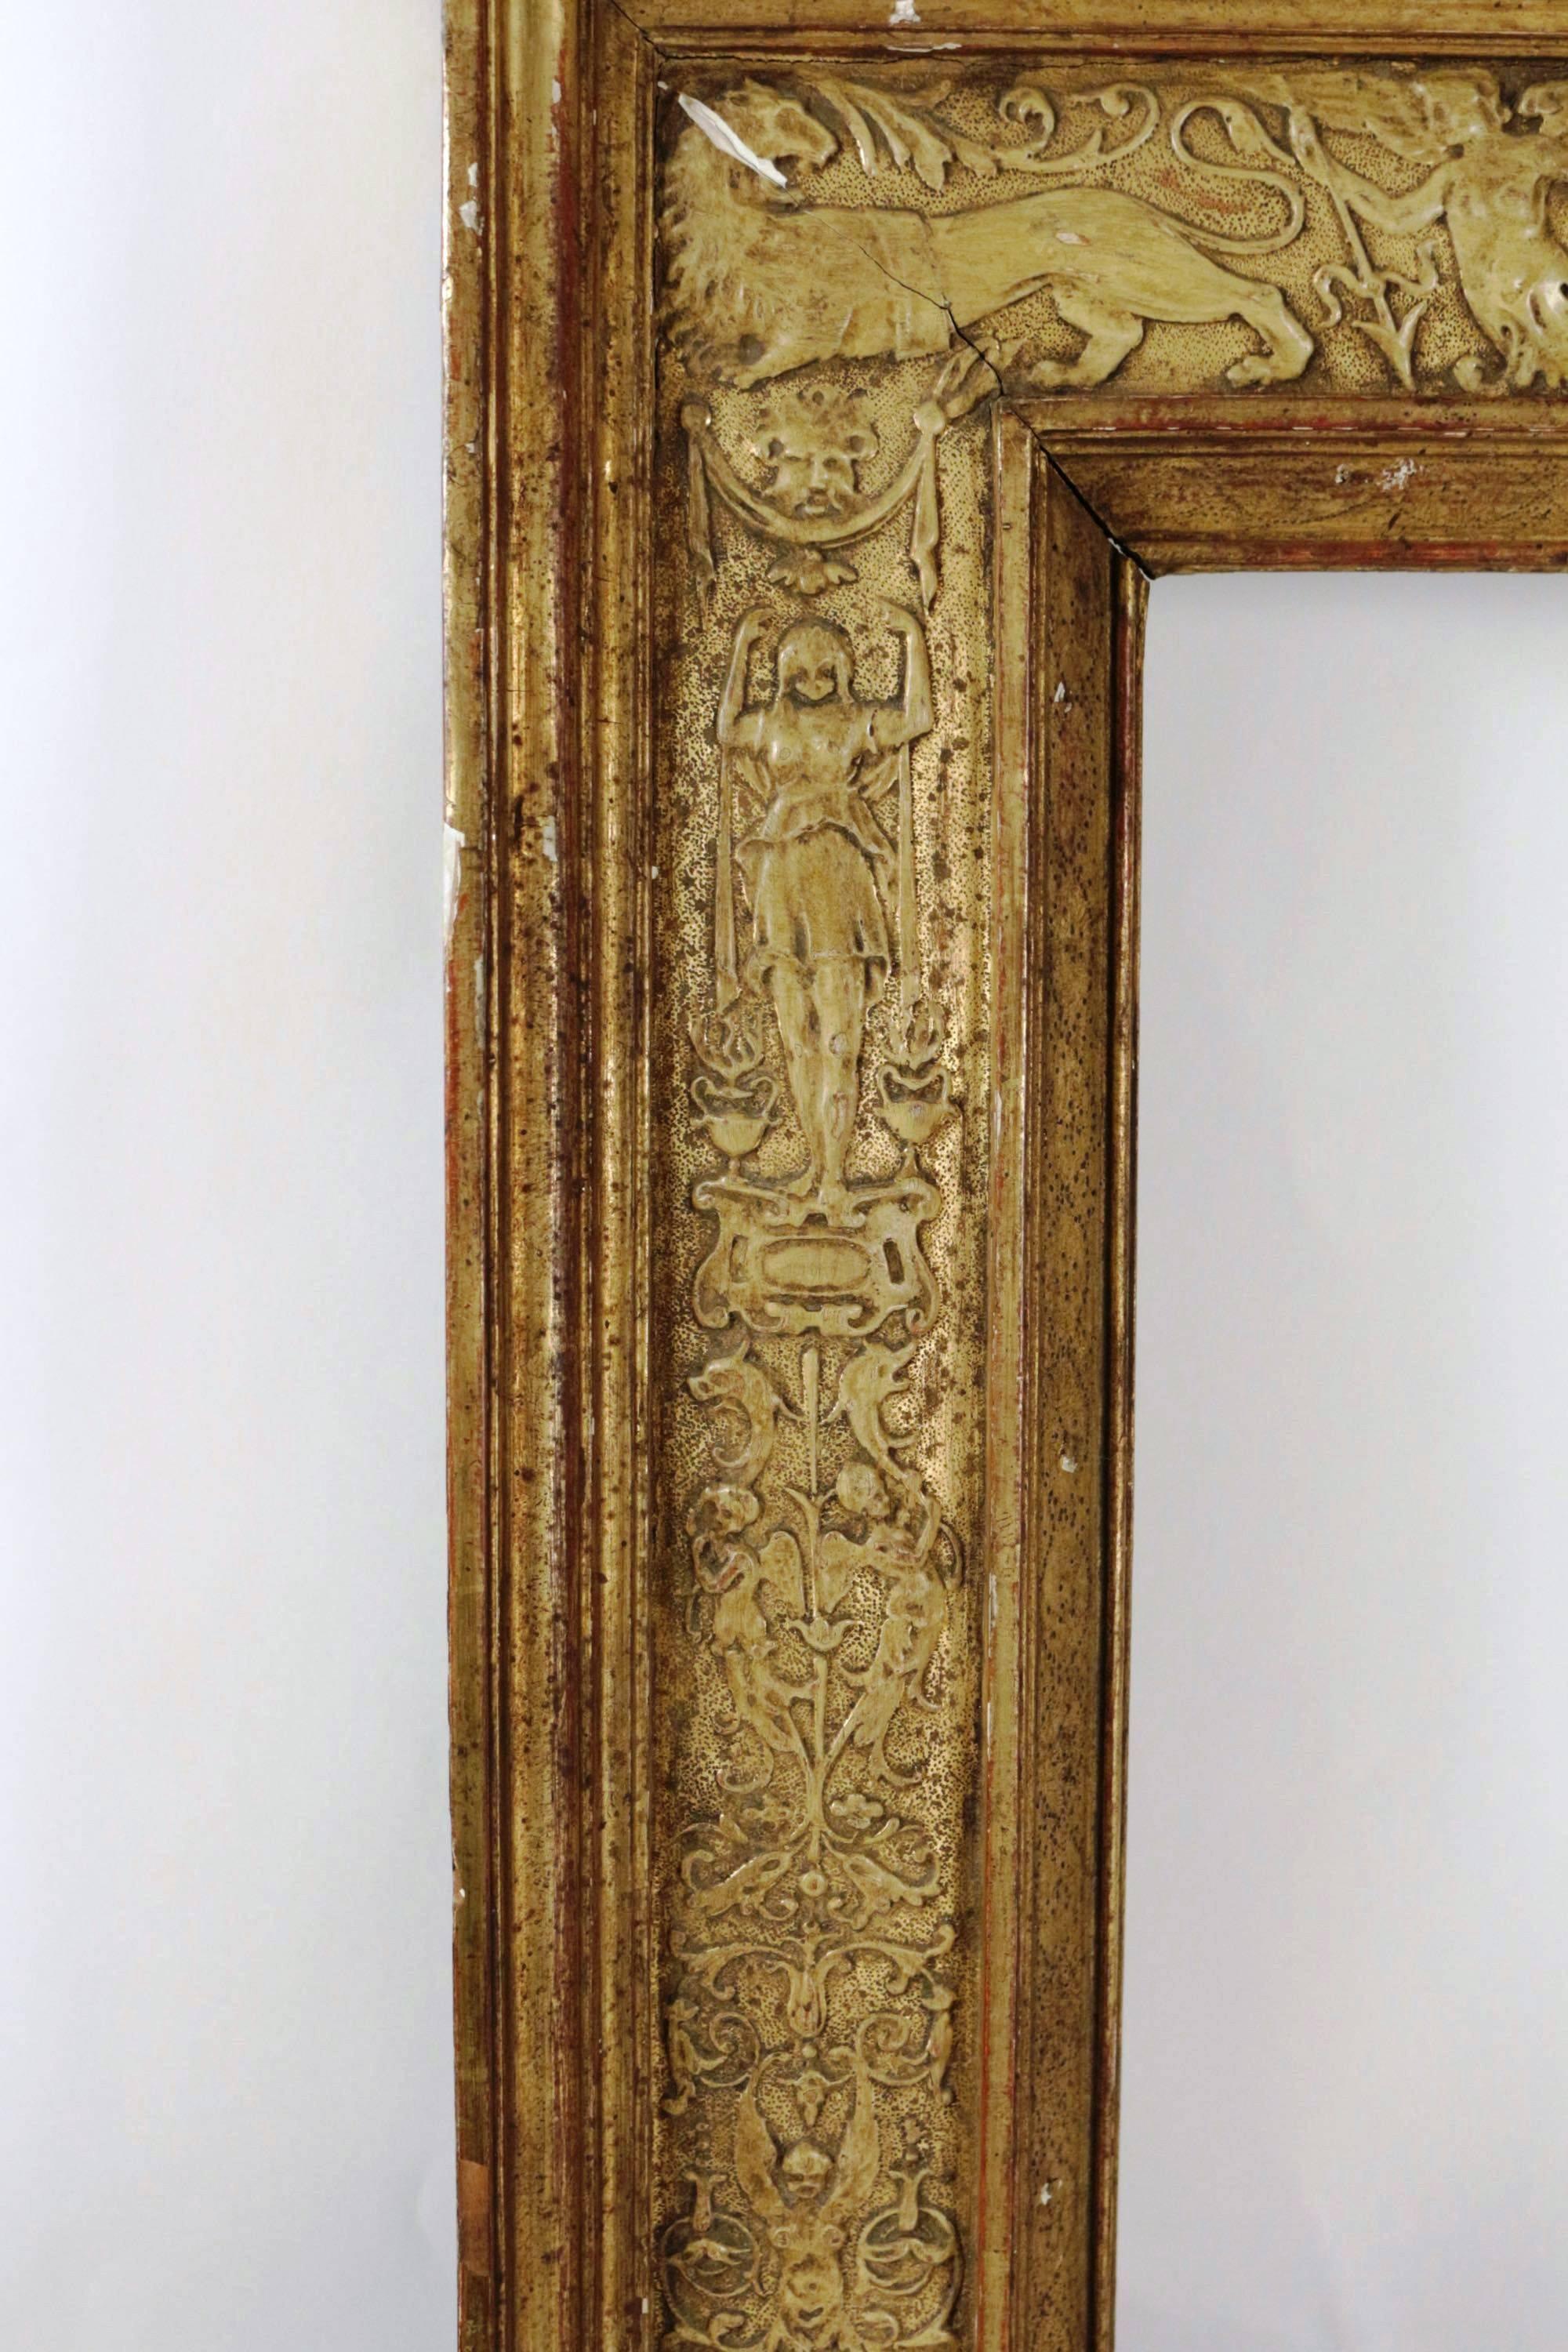 Renaissance Revival Italian Renaissance Style Frame Mounted as Mirror, Italy, Late 19th Century